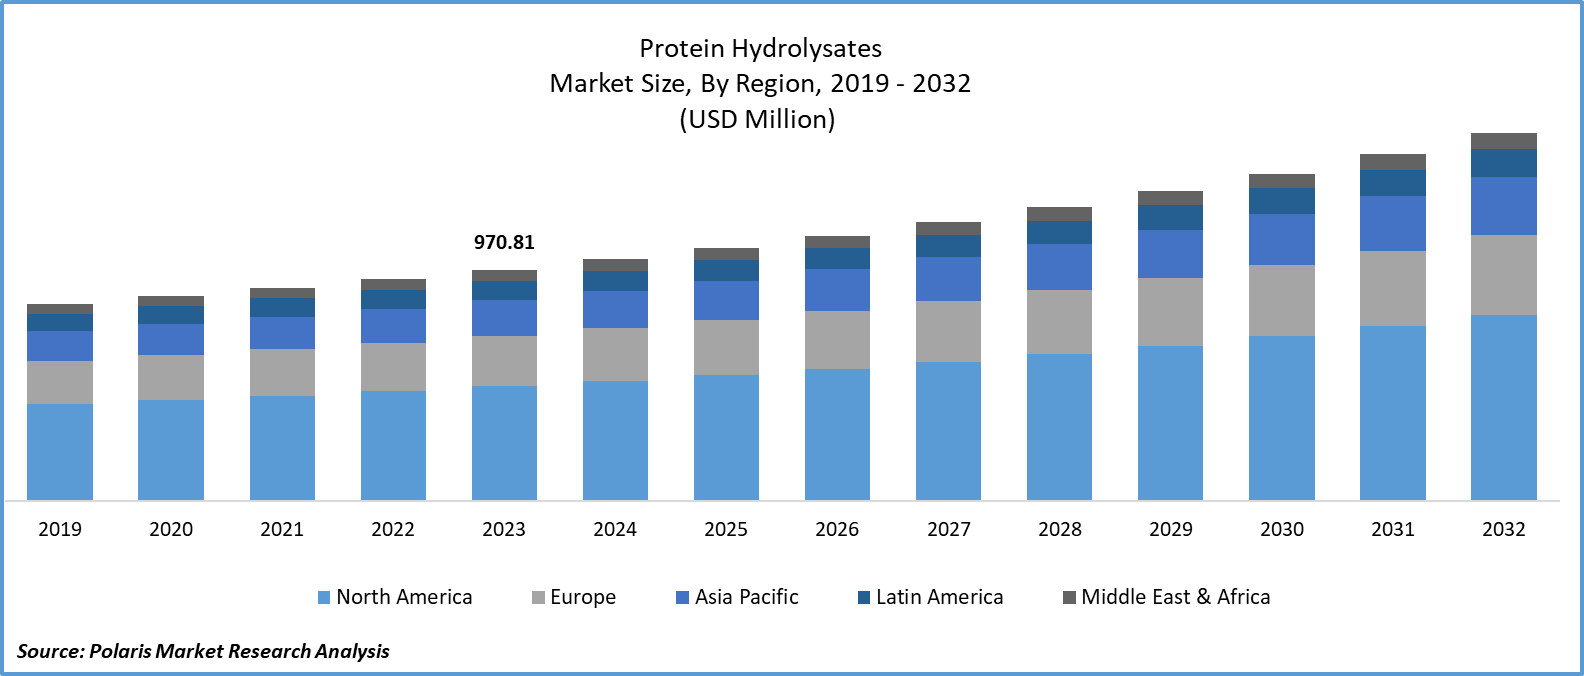 Protein Hydrolysates Market Size